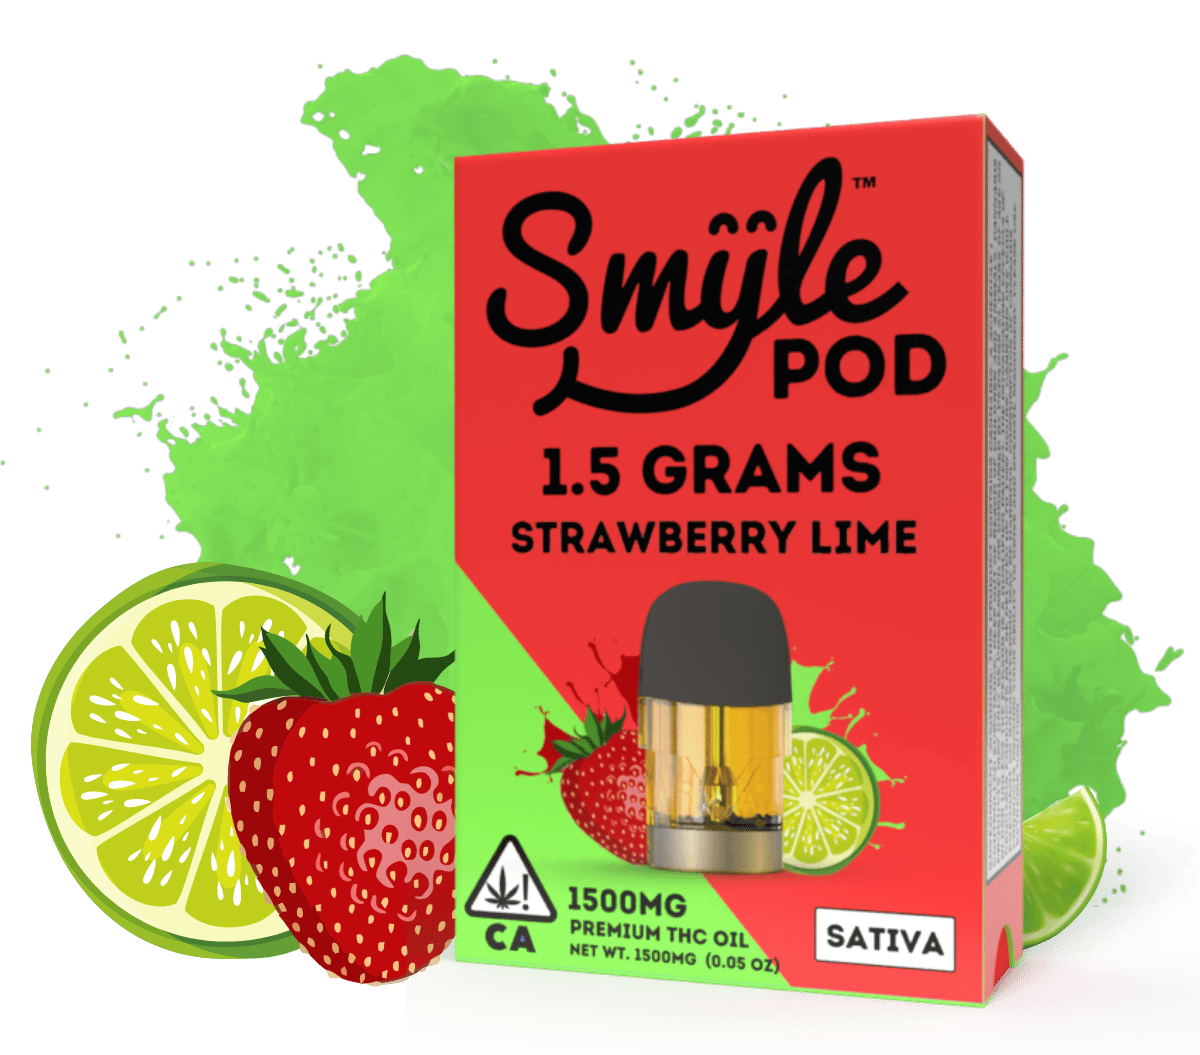 Smyle Strawberry Lime Box Angle 2 1